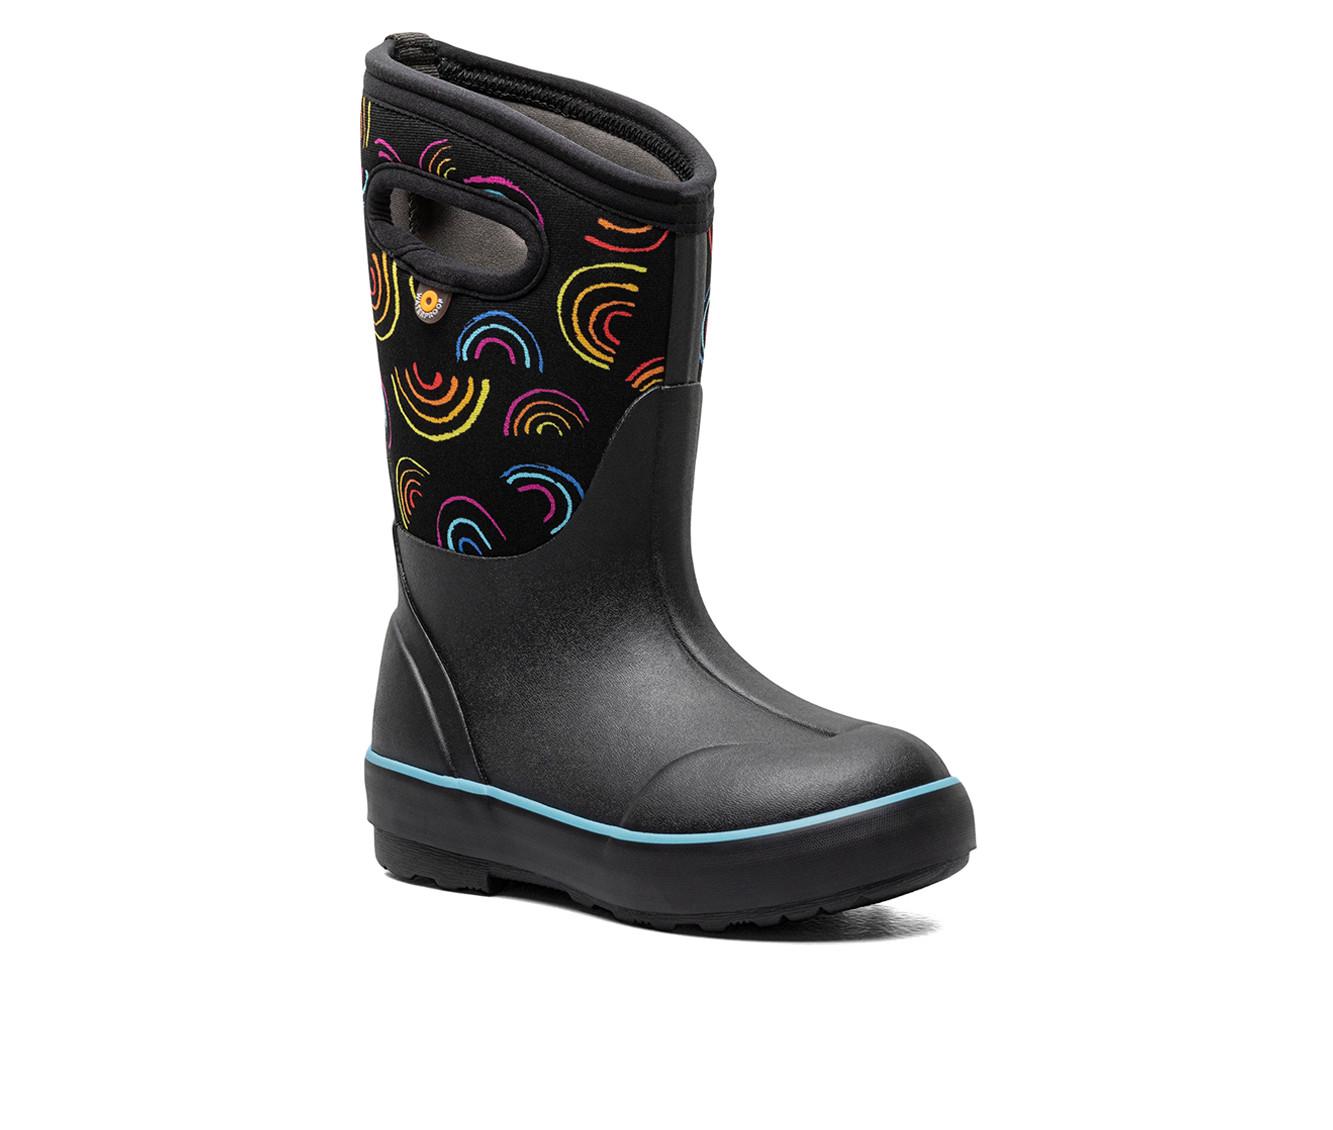 Kids' Bogs Footwear Toddler & Little Kid Classic II Wild Rainbow Winter Boots